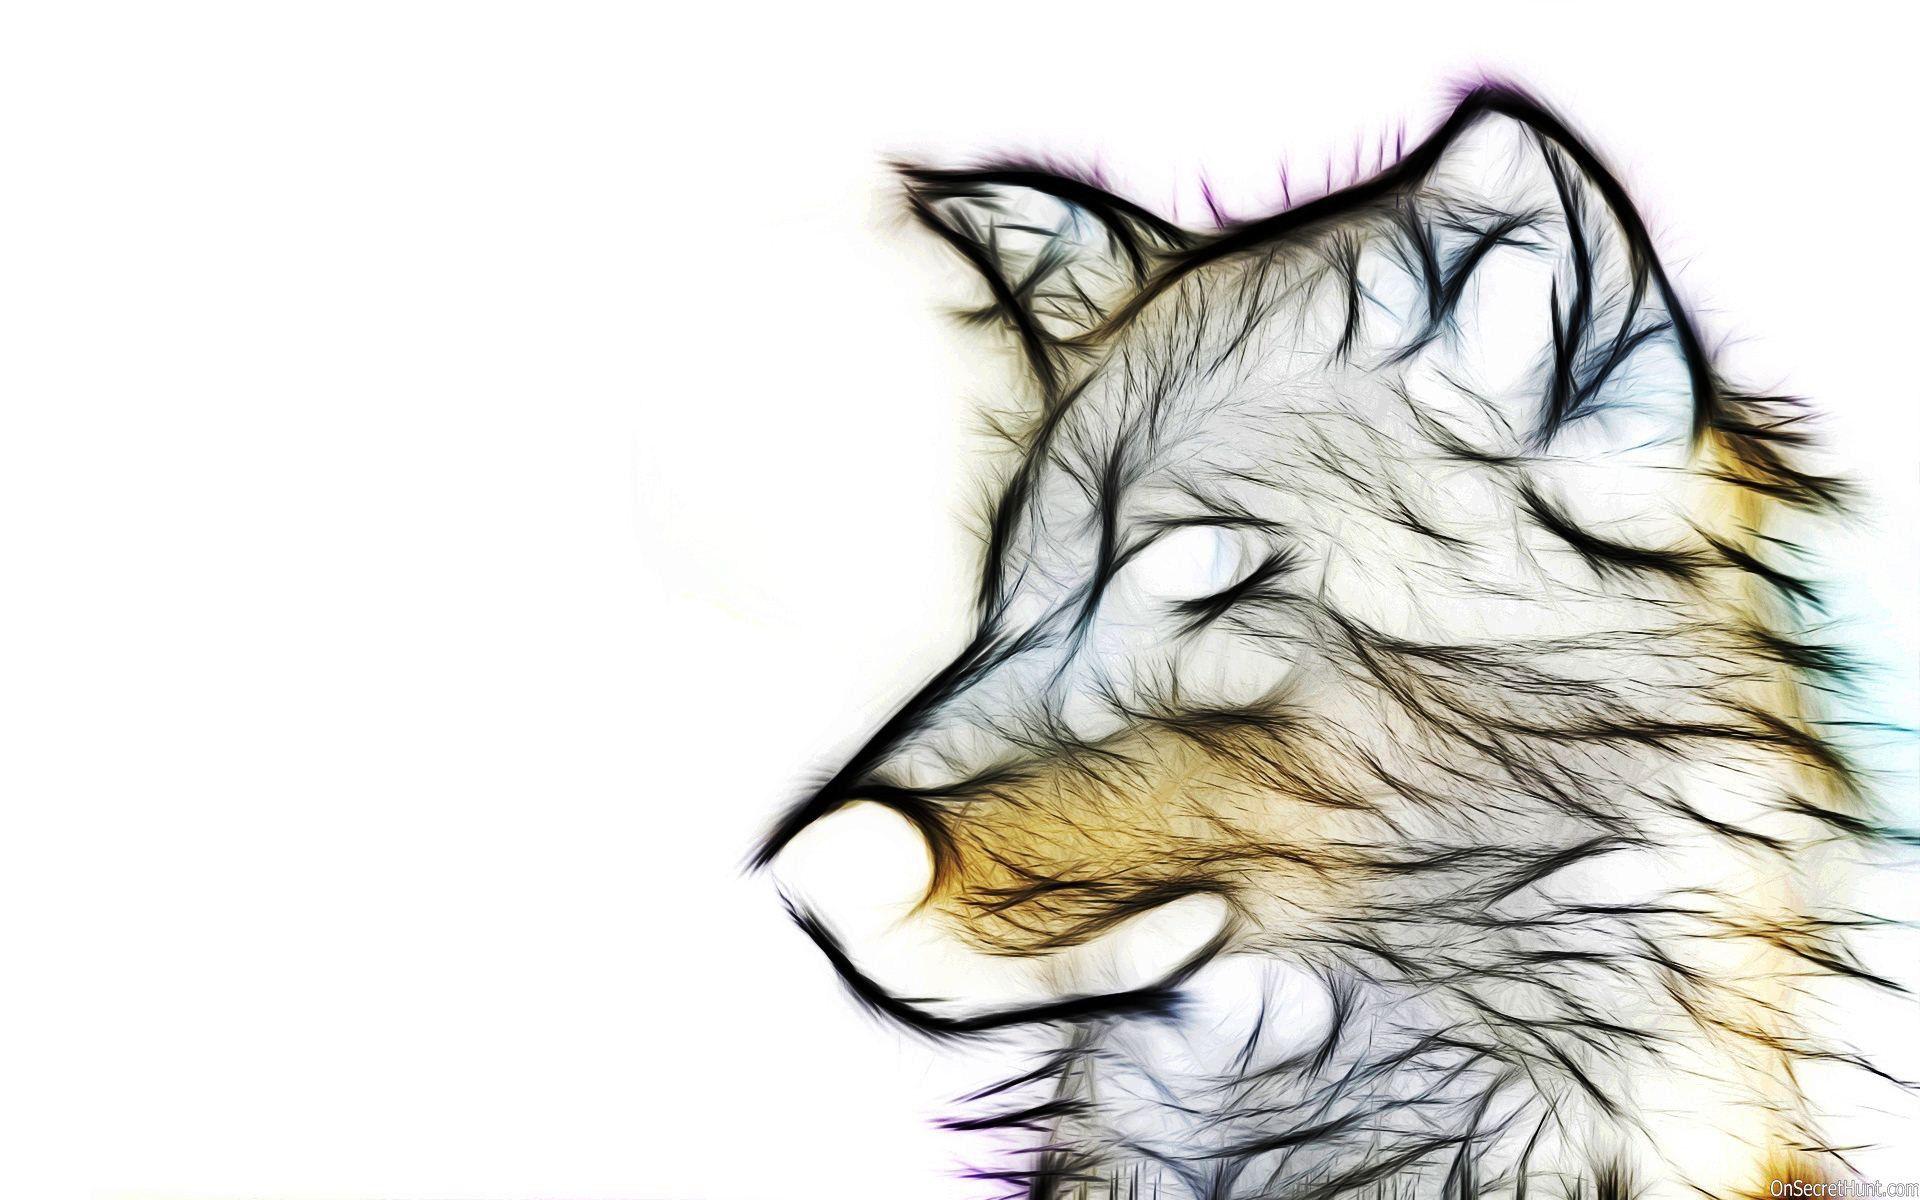 Best 3D Animal Wallpaper. HD Animated Animal Wallpaper